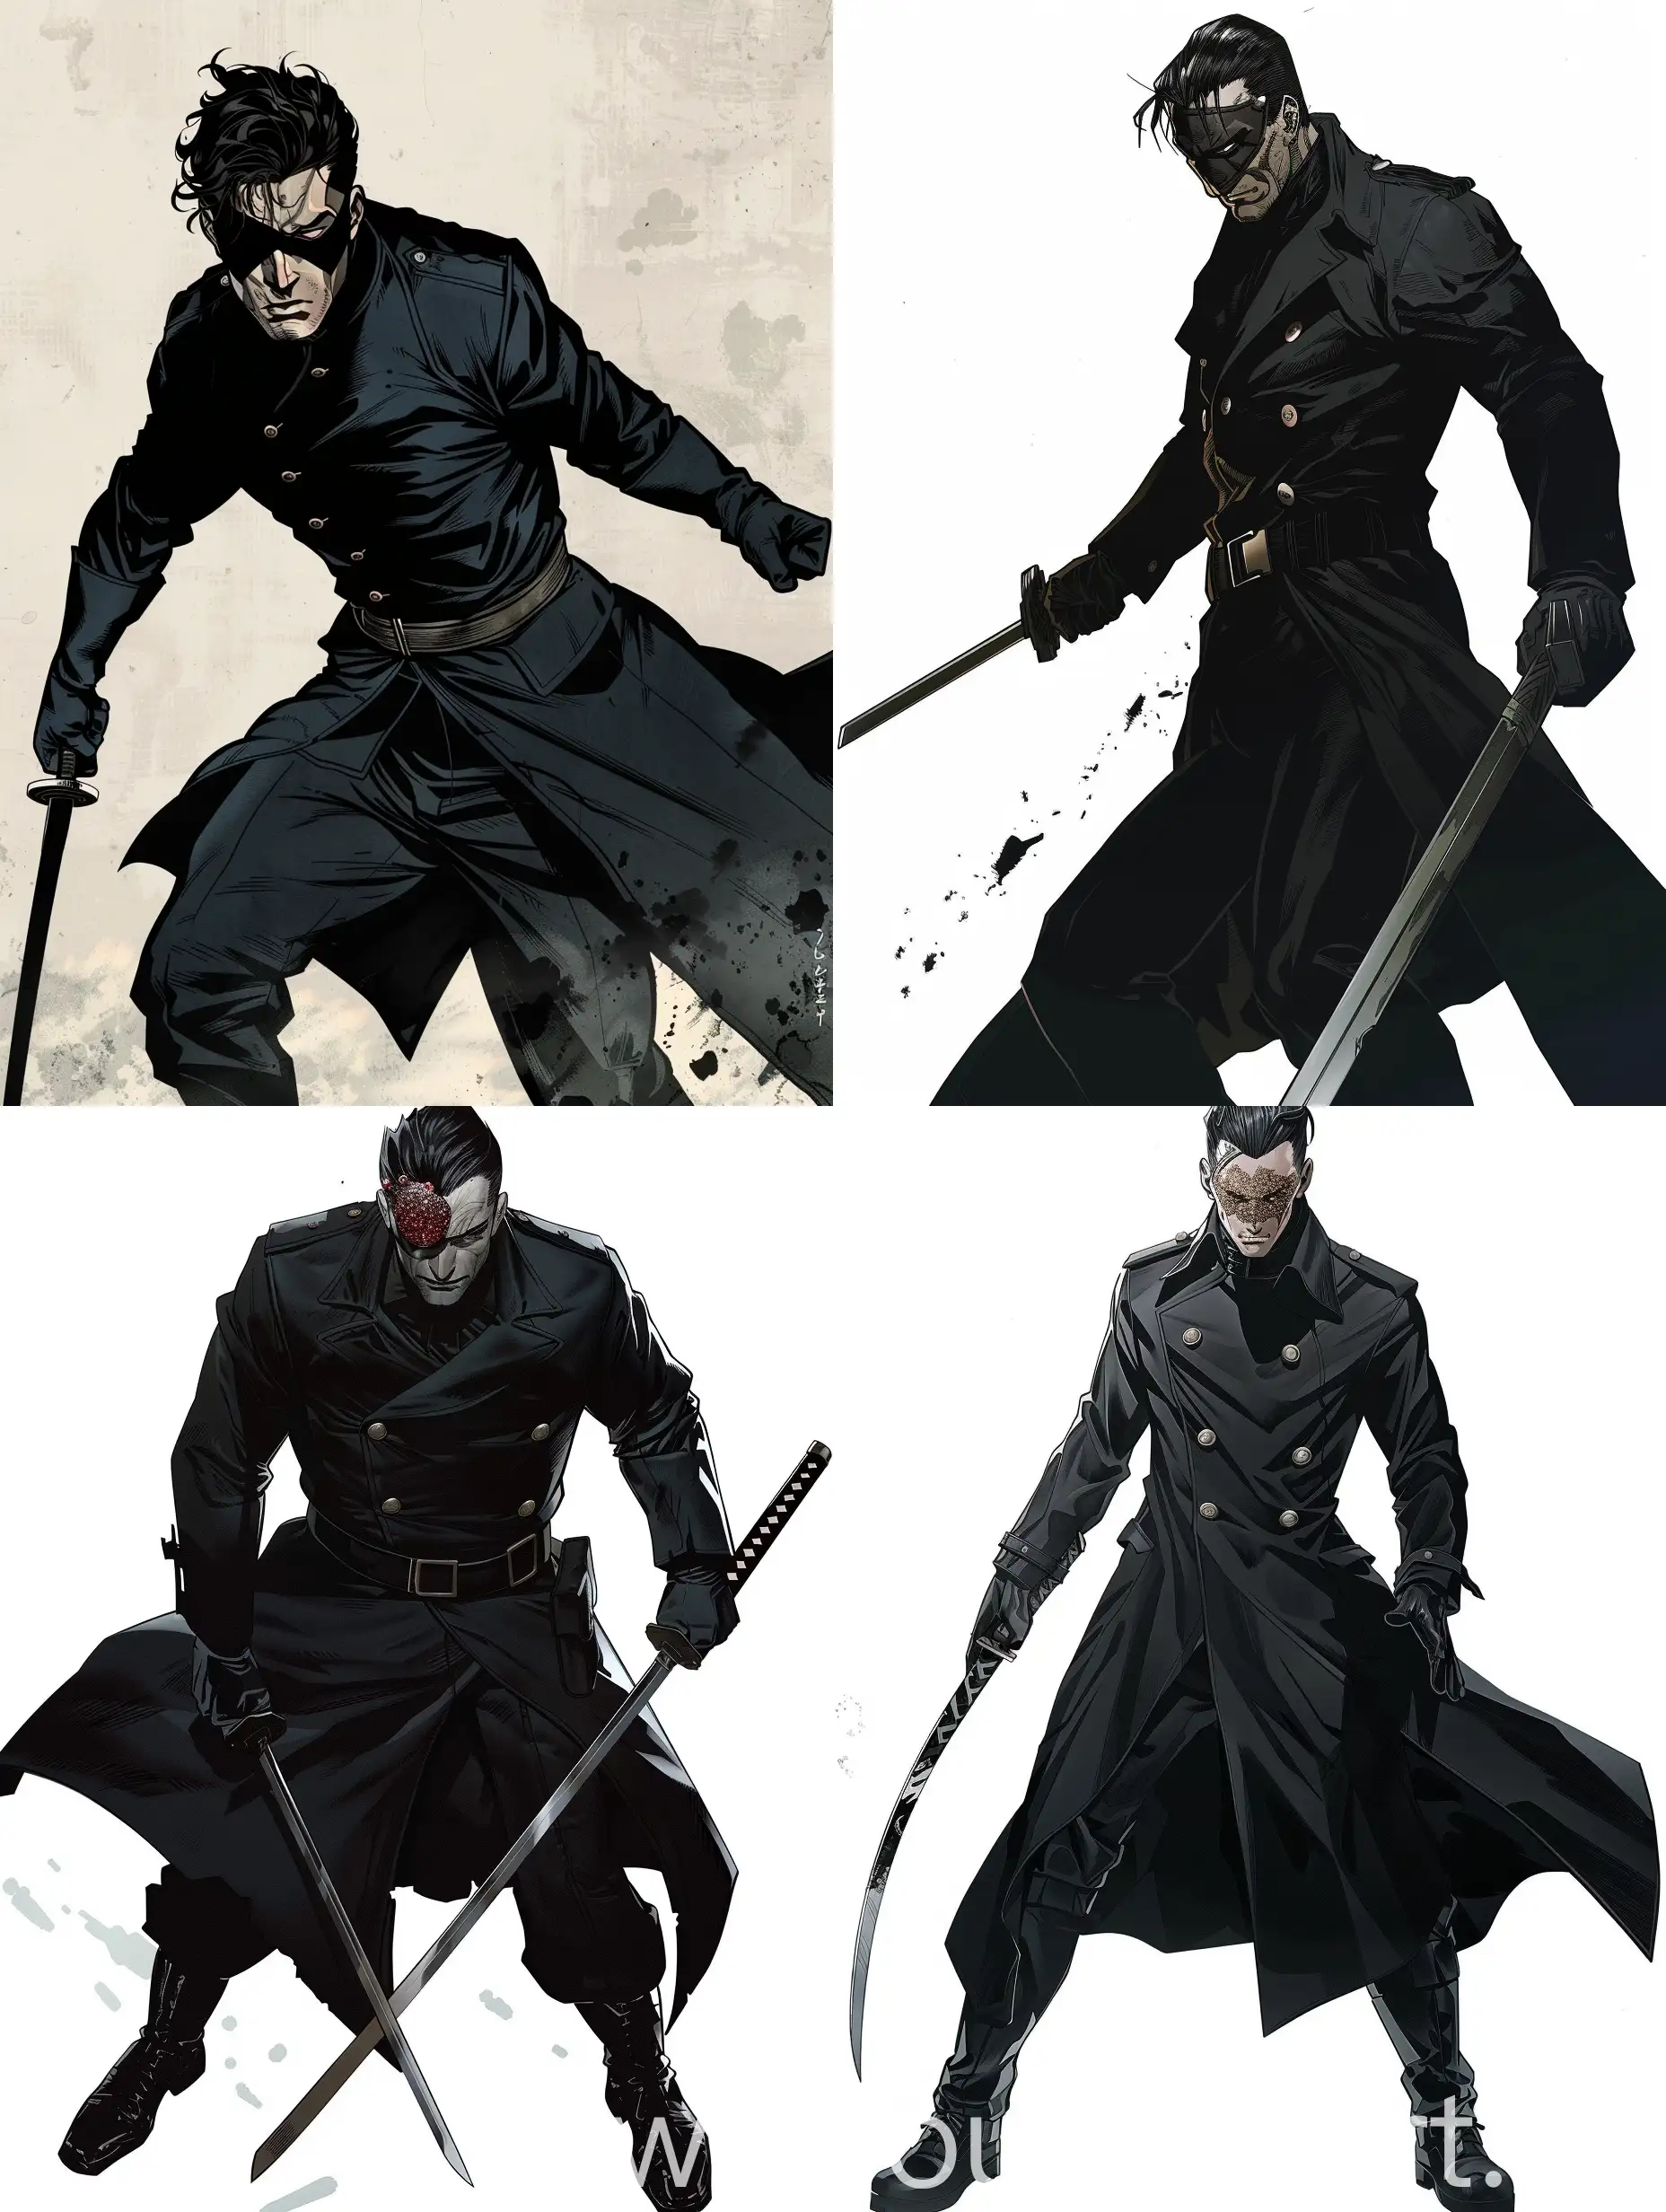 marvel comics, manga style, man in black coat, black uniform, half face mask, vibro sword, brutal pose